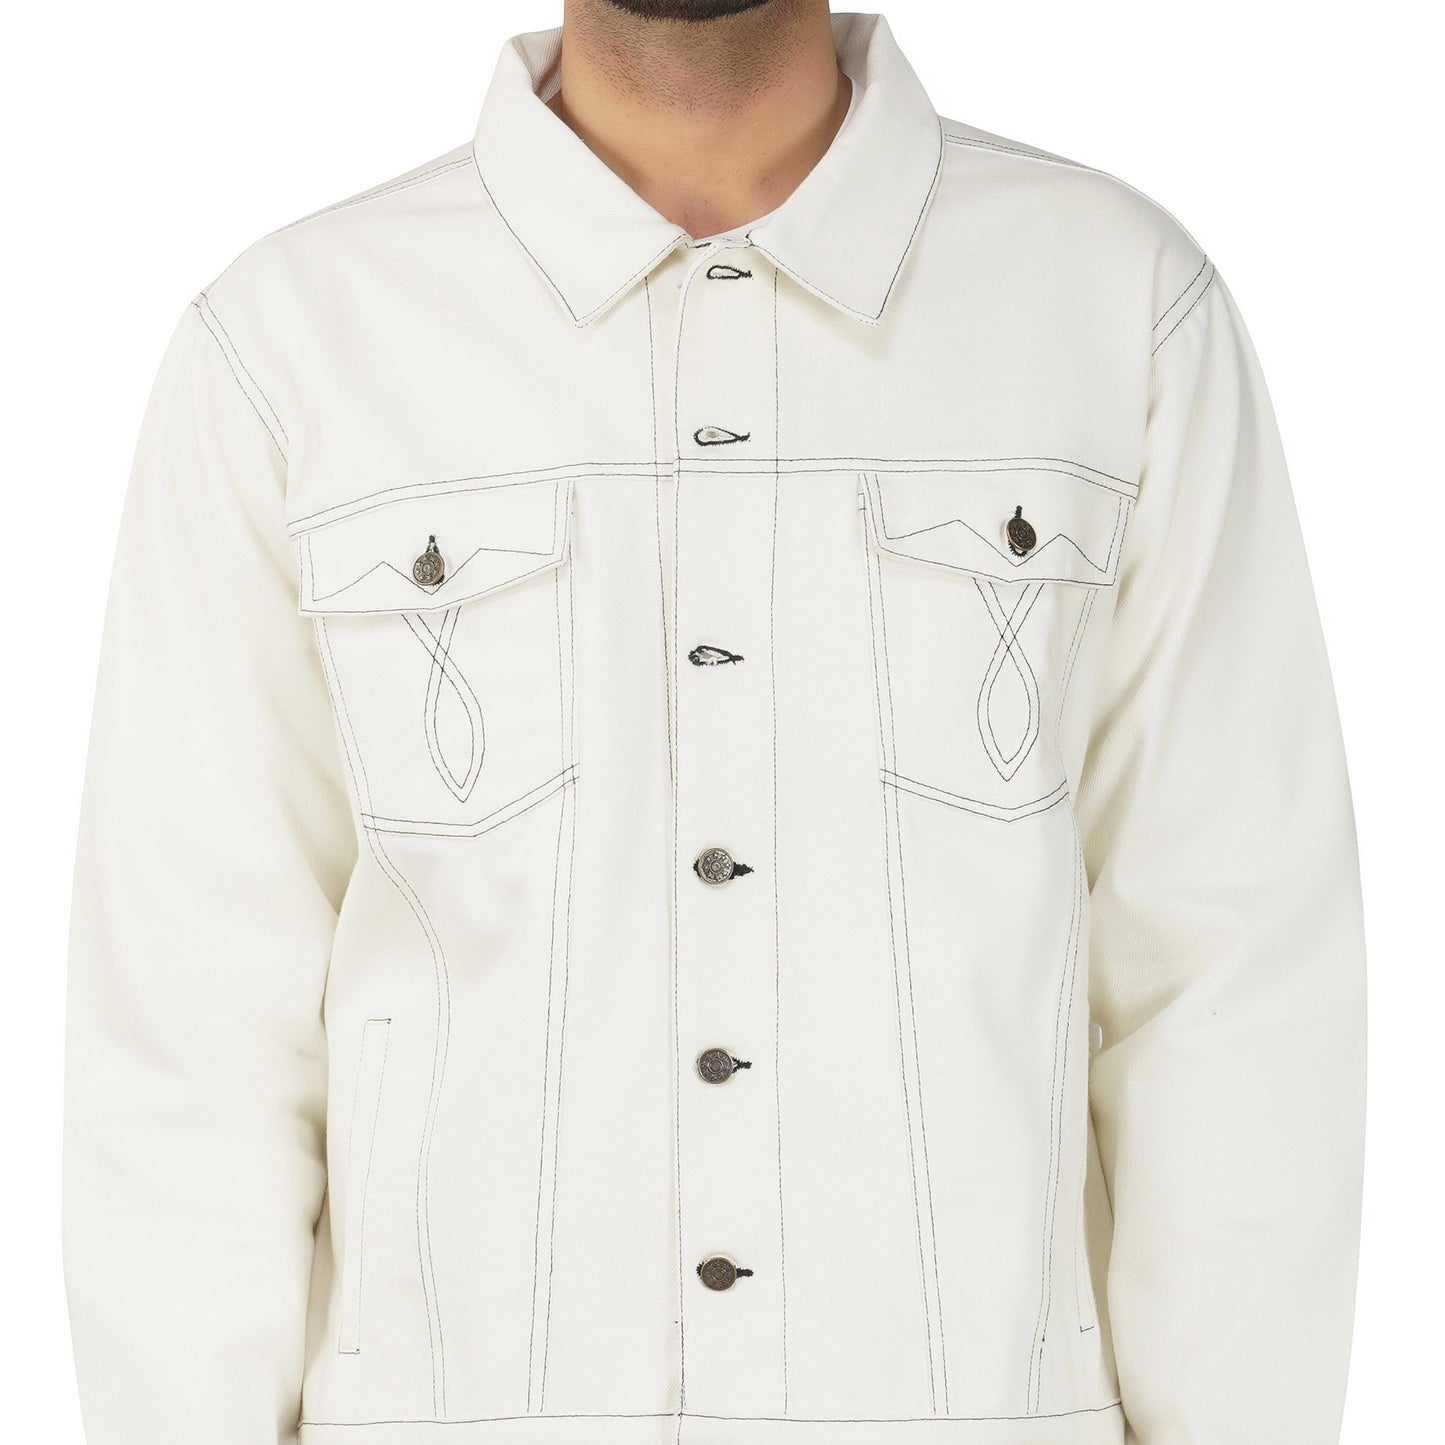 SLAY. Men's Off White Contrast Stitch Denim Cotton Biker Jacket For Men